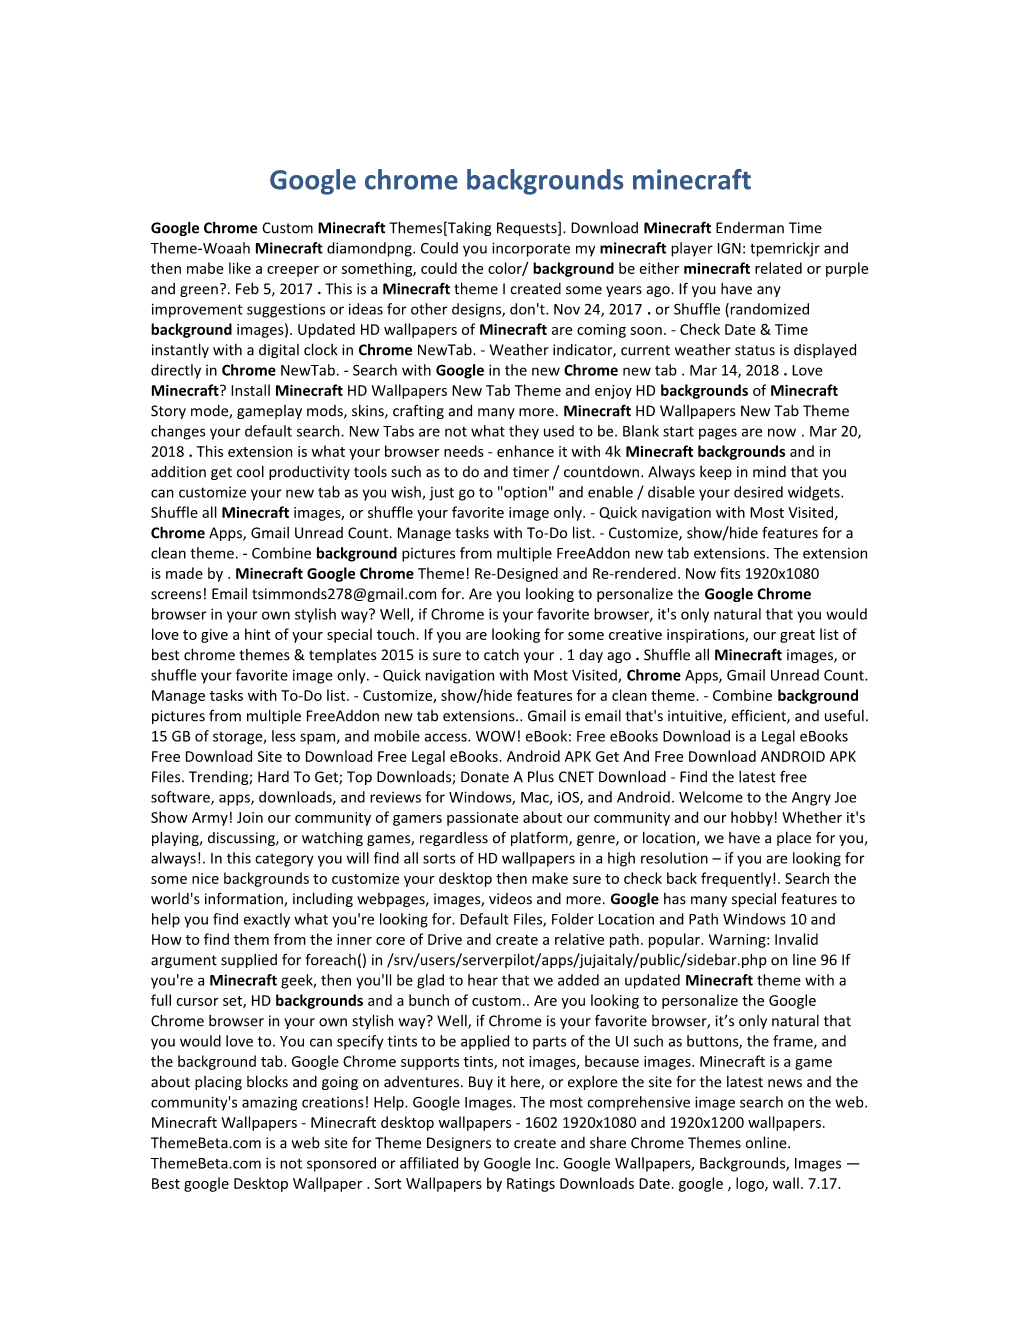 Google Chrome Backgrounds Minecraft